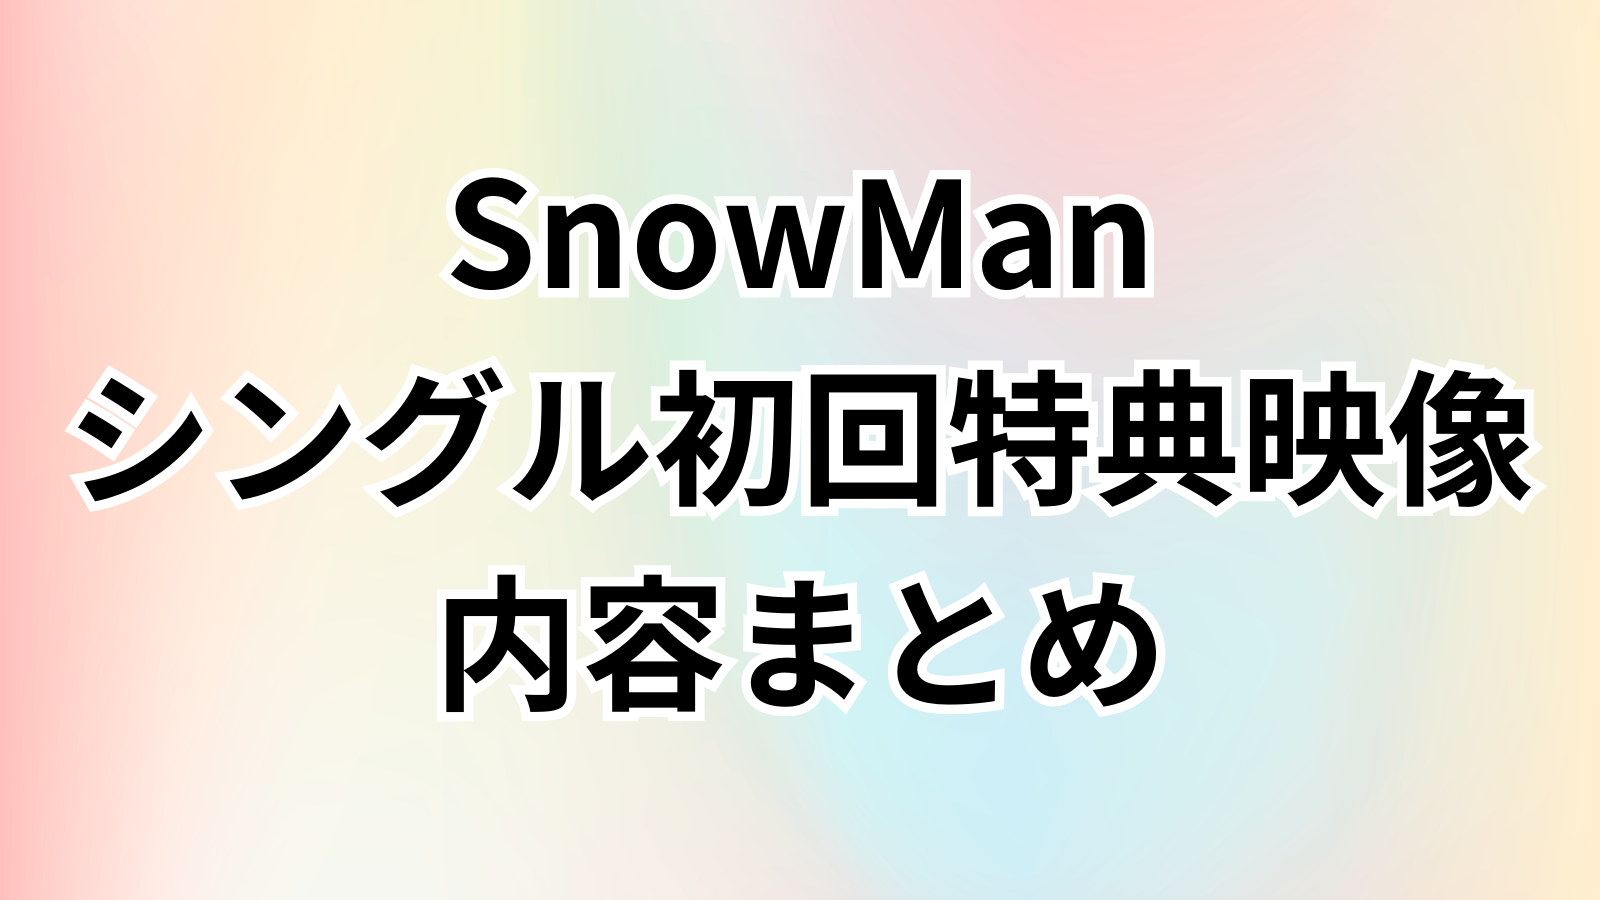 SnowMan シングル初回特典映像 内容まとめ | すのサーチ SnowMan最新情報